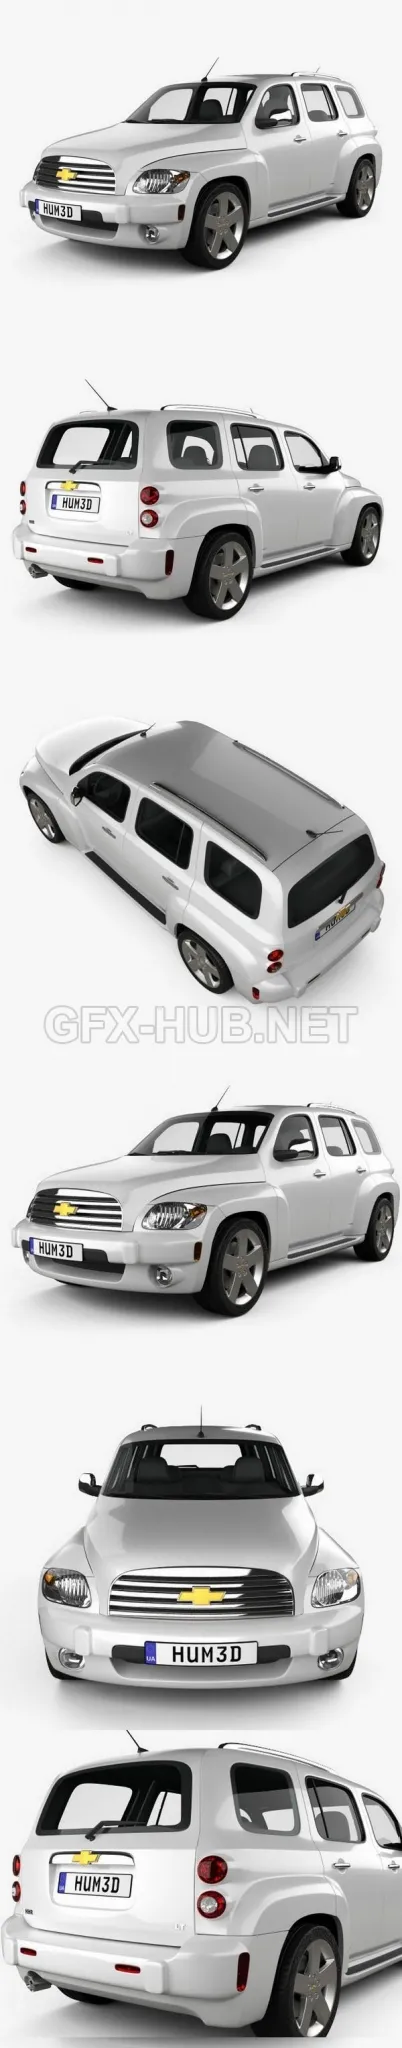 CAR – Chevrolet HHR wagon 2011  3D Model